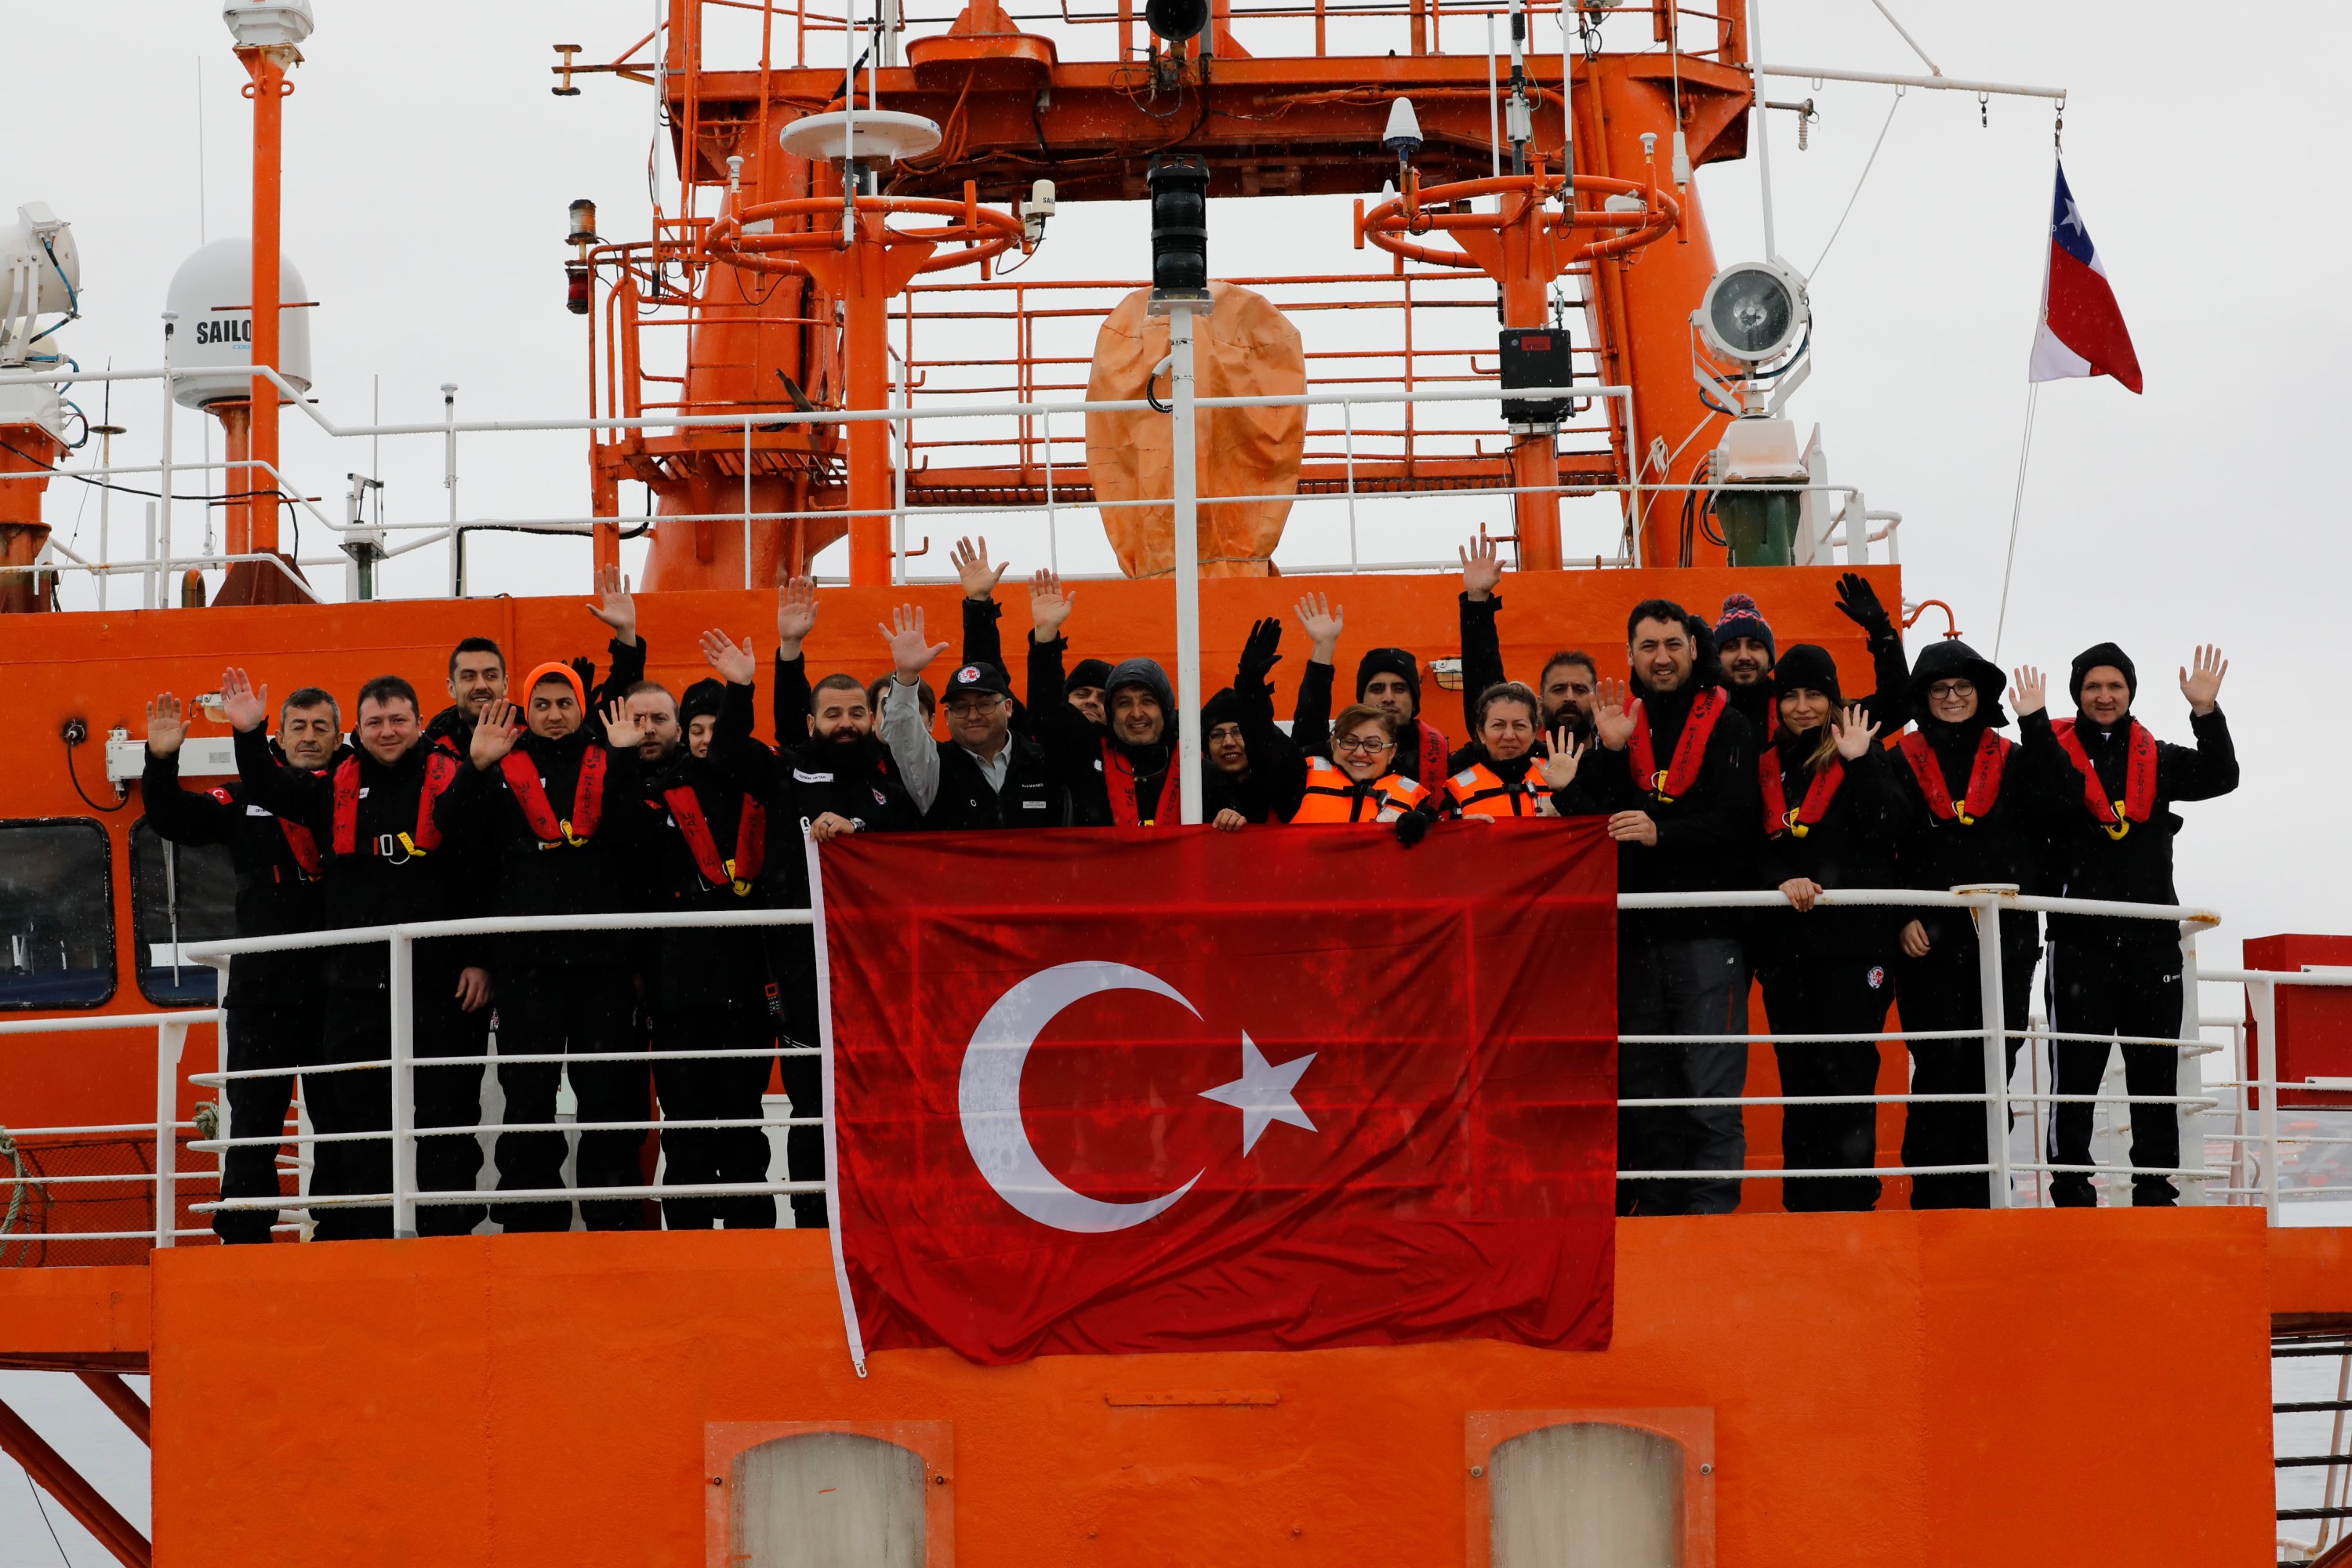 The team bids farewell before they embark on their journey. (Photos by Hayrettin Bektaş)